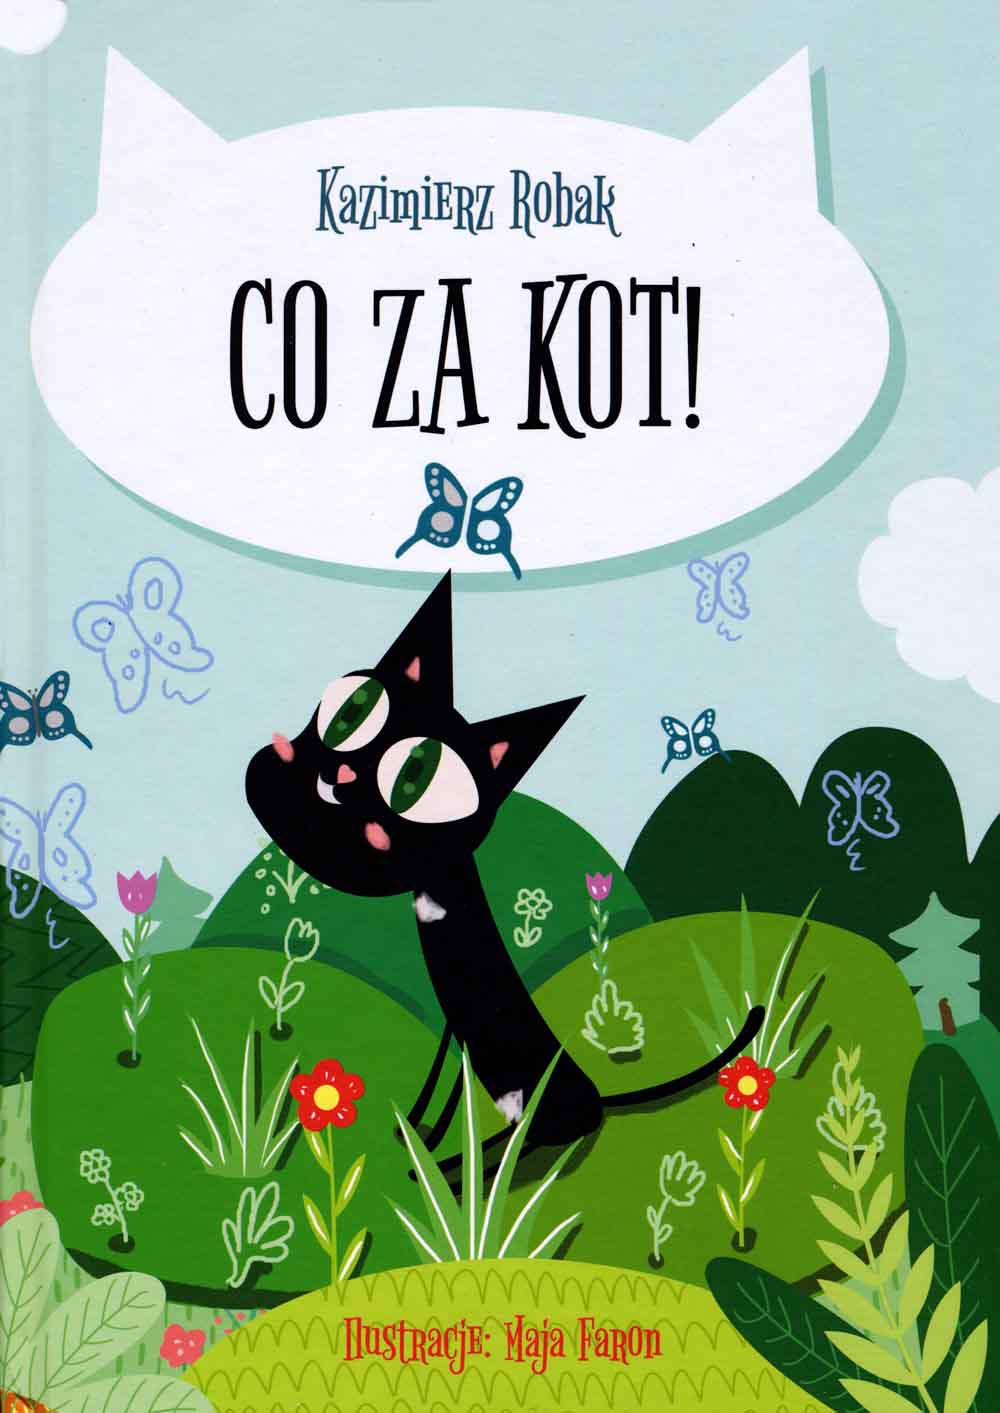 Co za kot, Figa, Dobry Noe, Karol Choiński, Monika Pawlak, Maja Faron, Kazimierz Robak 